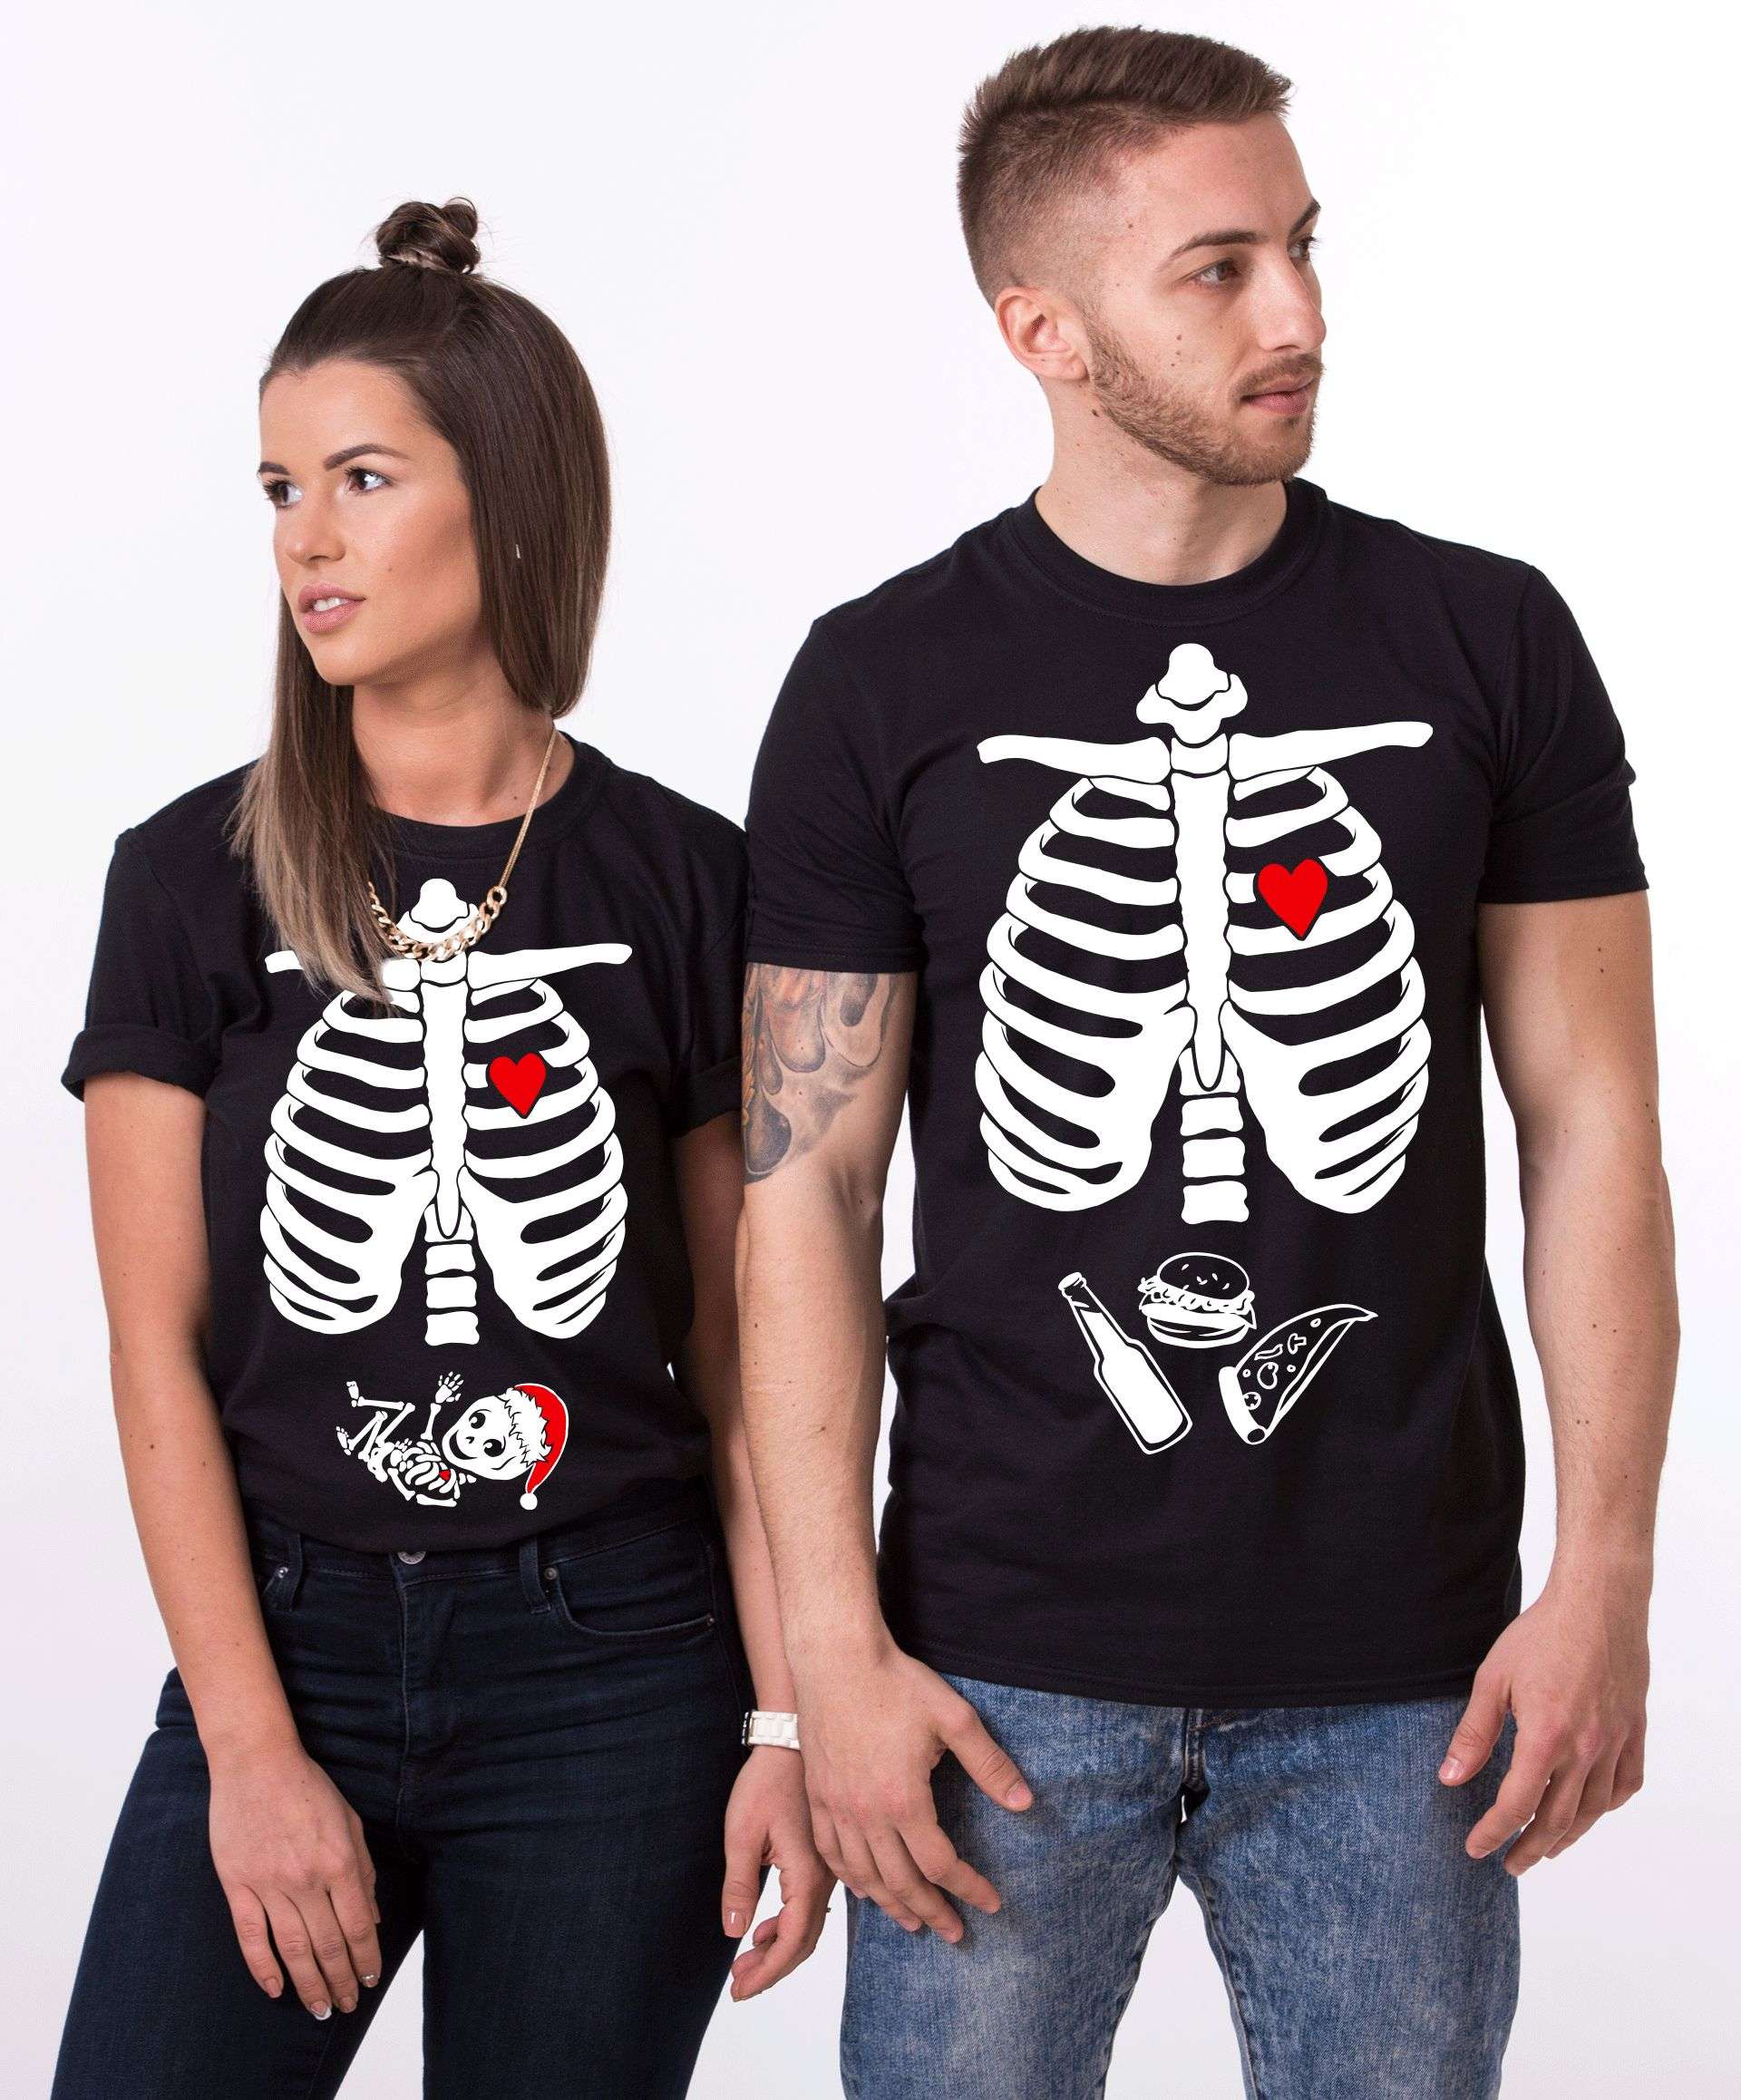 Christmas Skeleton Shirts, Maternity Shirt, Matching Couples Shirts